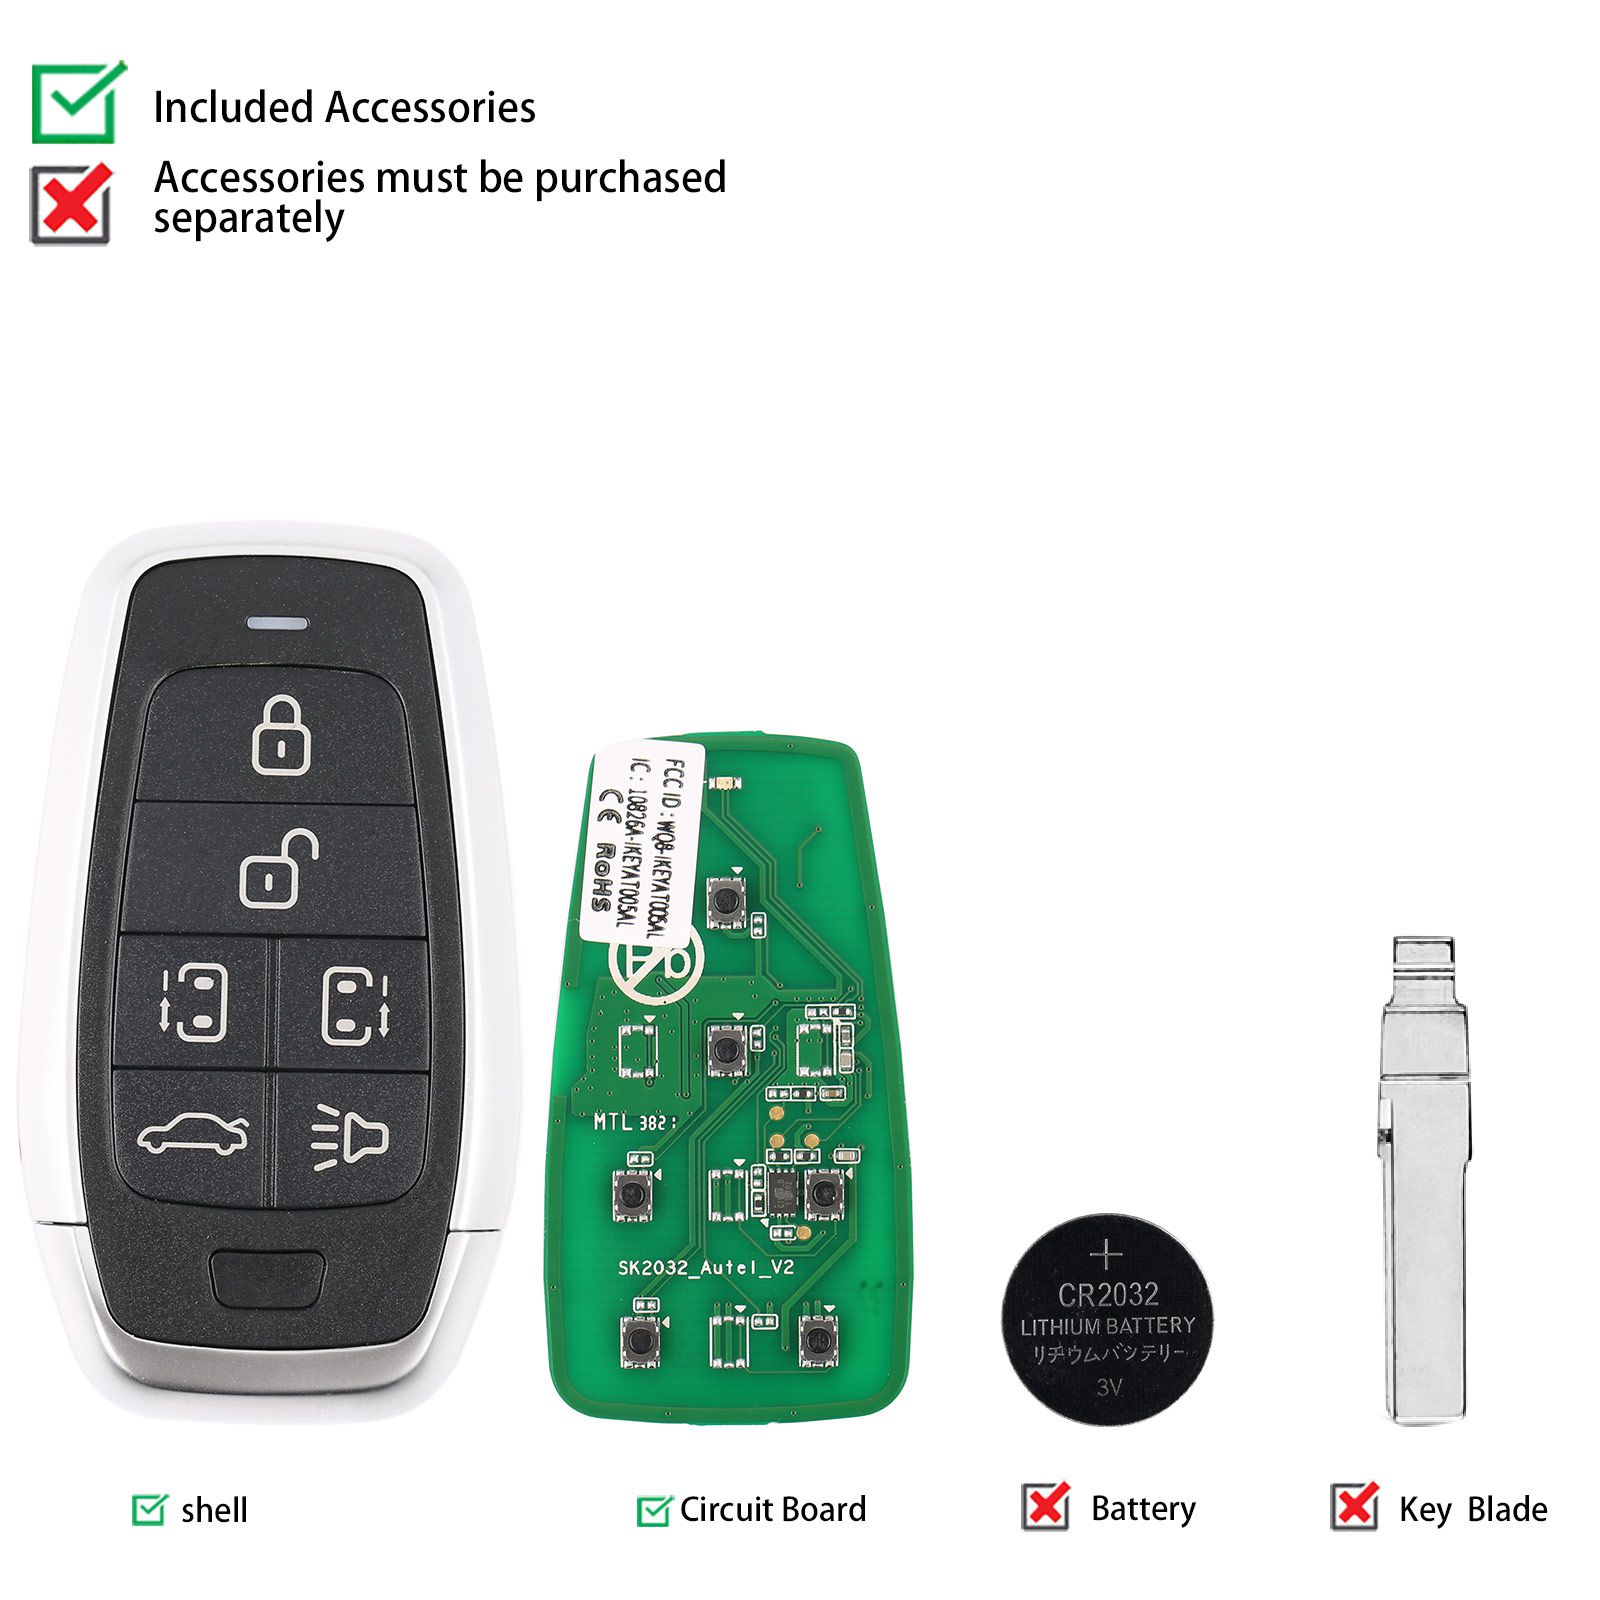 AUTEL IKEYAT006BL 6 Buttons Independent Universal Smart Key 5pcs/lot